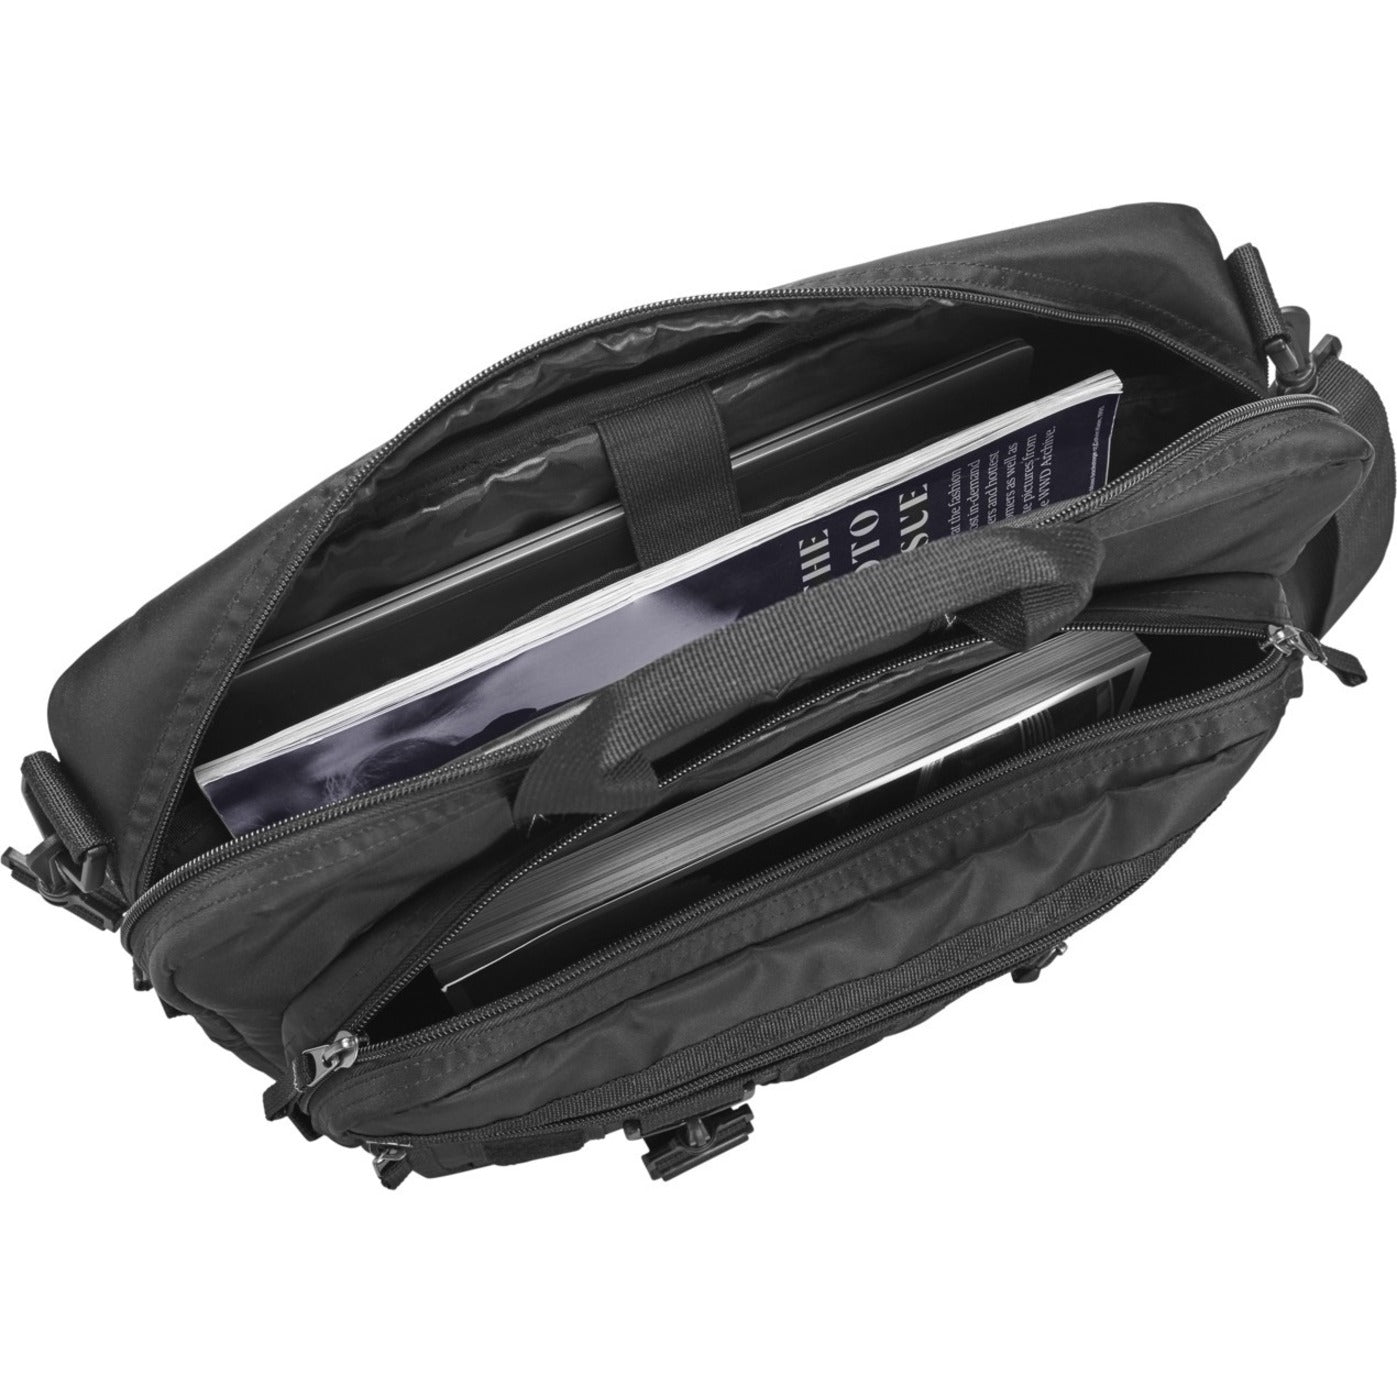 V7 CTX16-OPS-BLK 16" Elite Black Ops Topload Briefcase, Water Resistant, Trolley Strap, Black